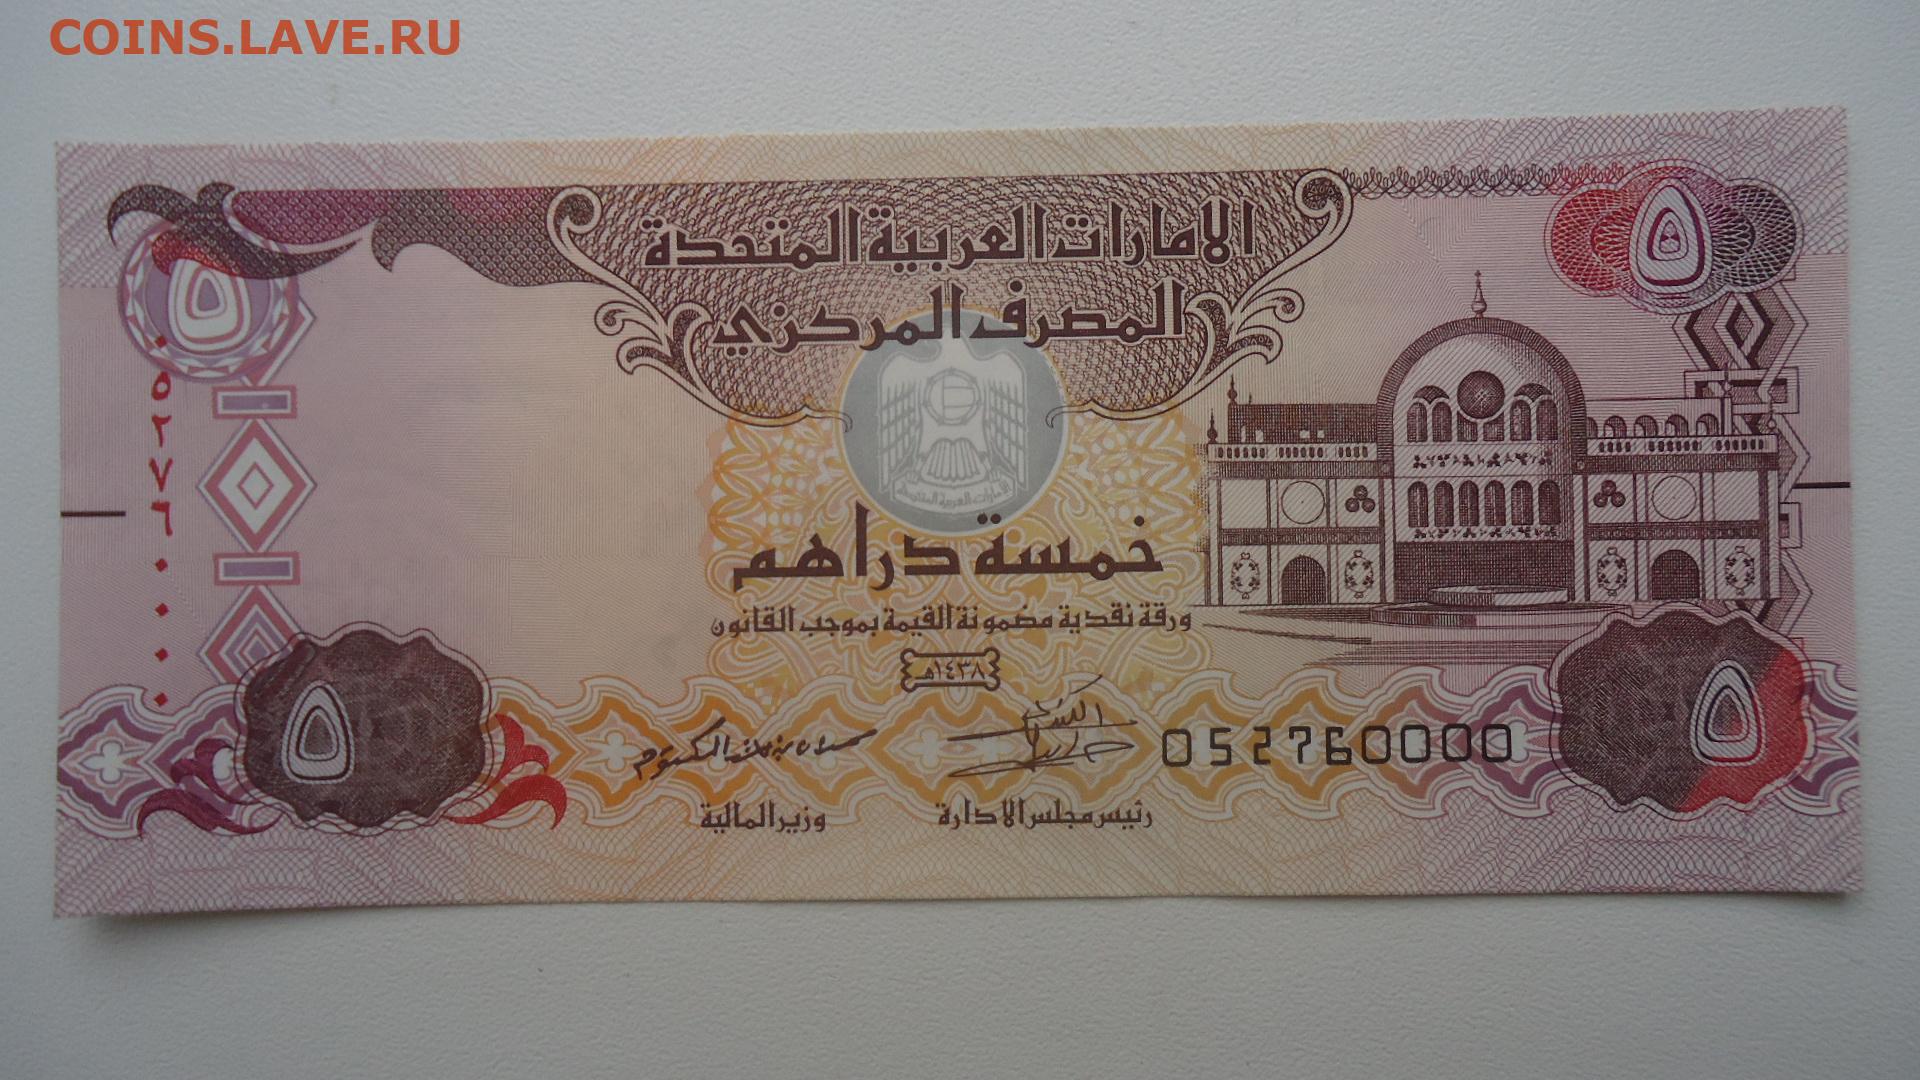 95 дирхам. 5 Дирхам ОАЭ. Банкнота ОАЭ 10 дирхам. 25 Дирхам Объединенные арабские эмираты. Дирхам ОАЭ К доллару США.